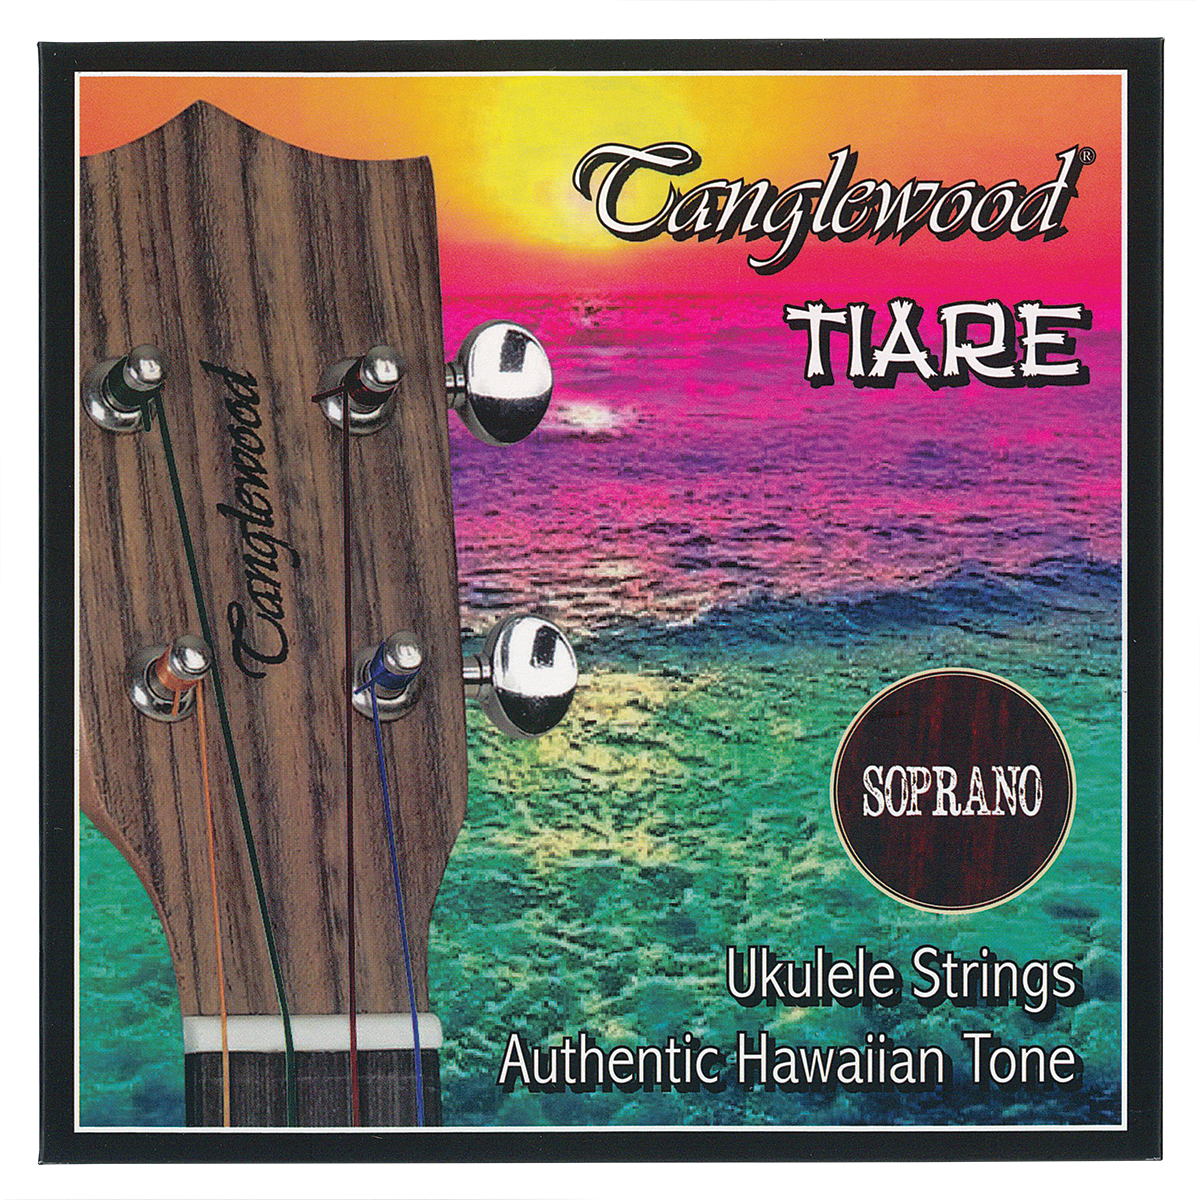 Tanglewood Tiare Soprano Ukulele Strings